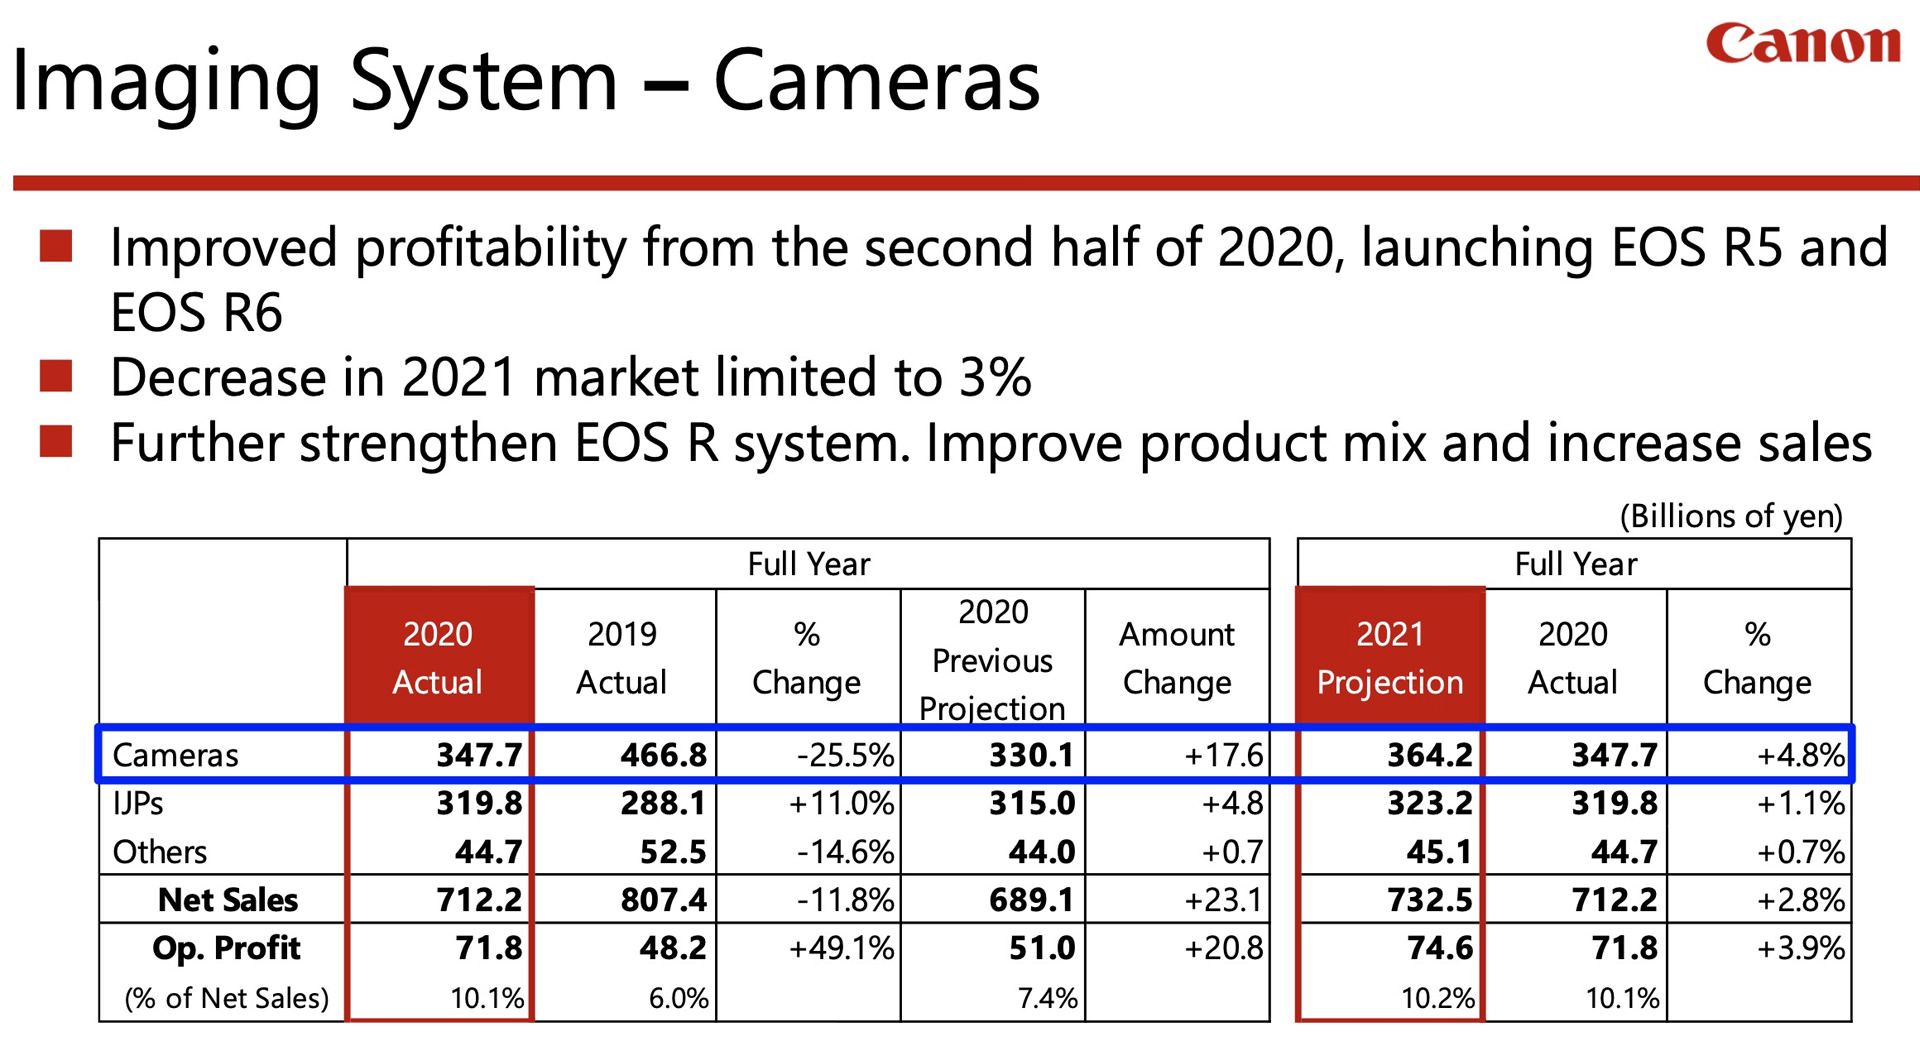 Camera sales in Canon 2020 financial report